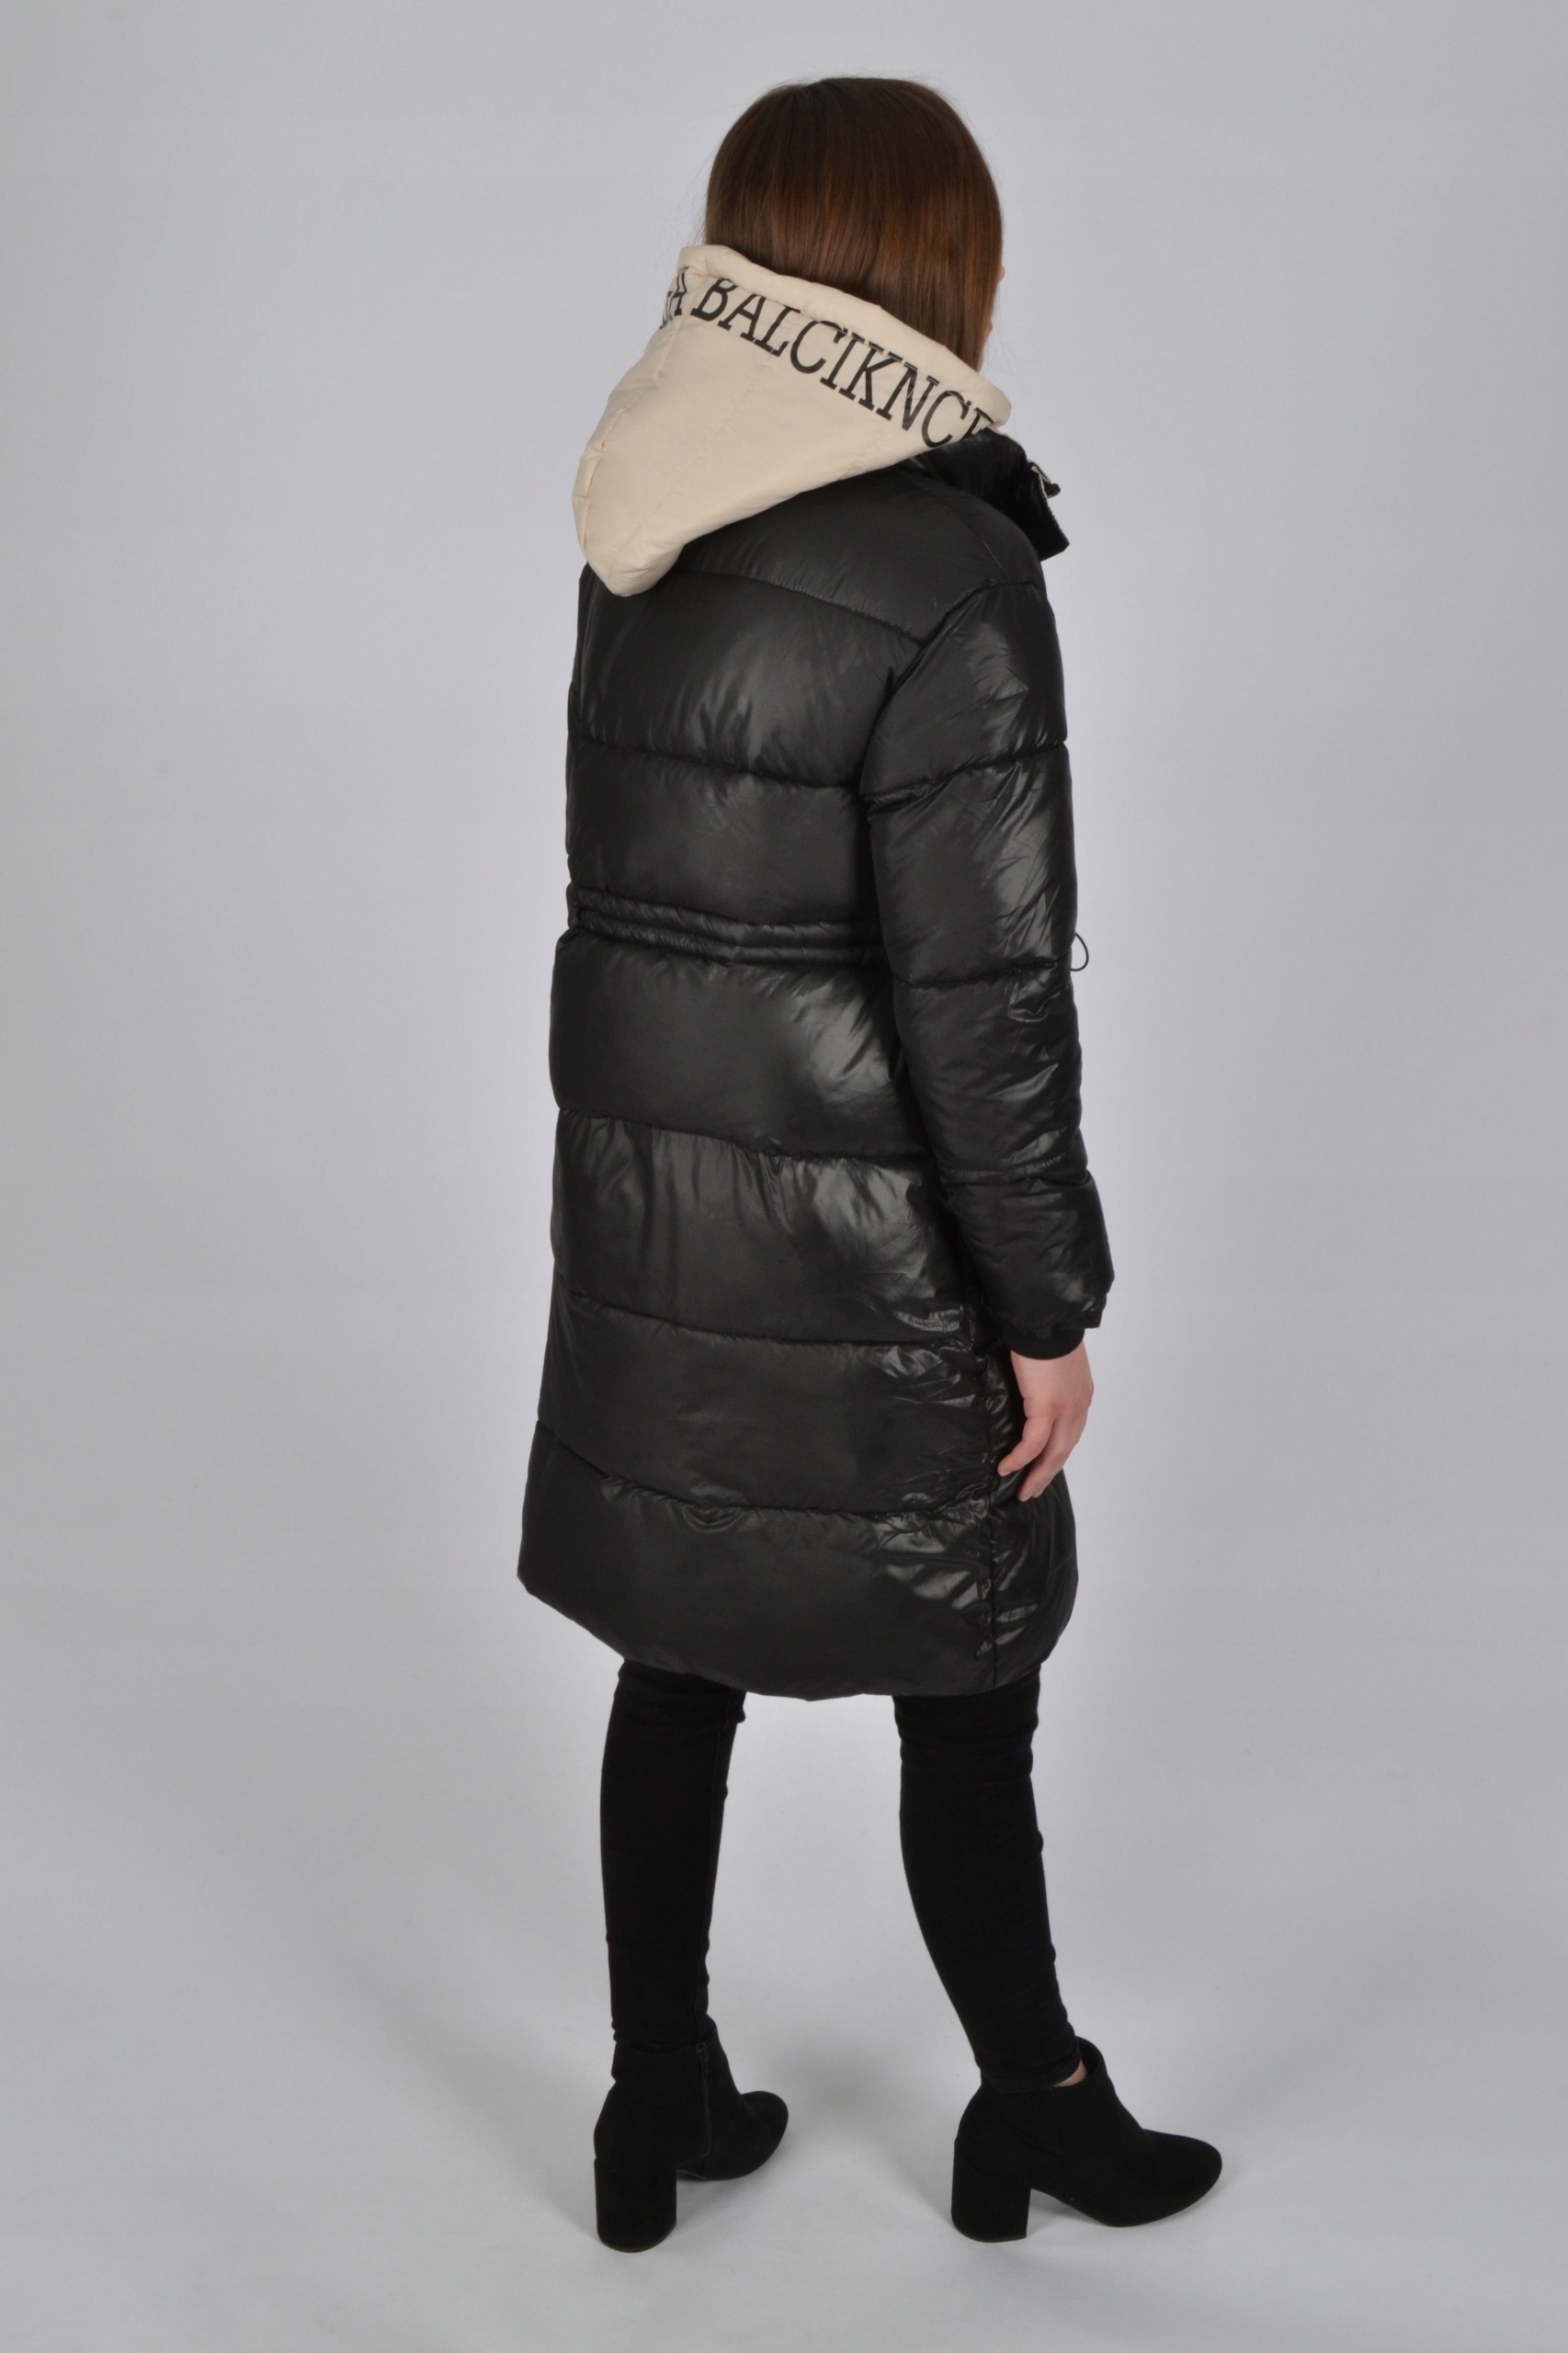 Пальто Зимняя стеганая куртка с капюшоном XL Type down-filled